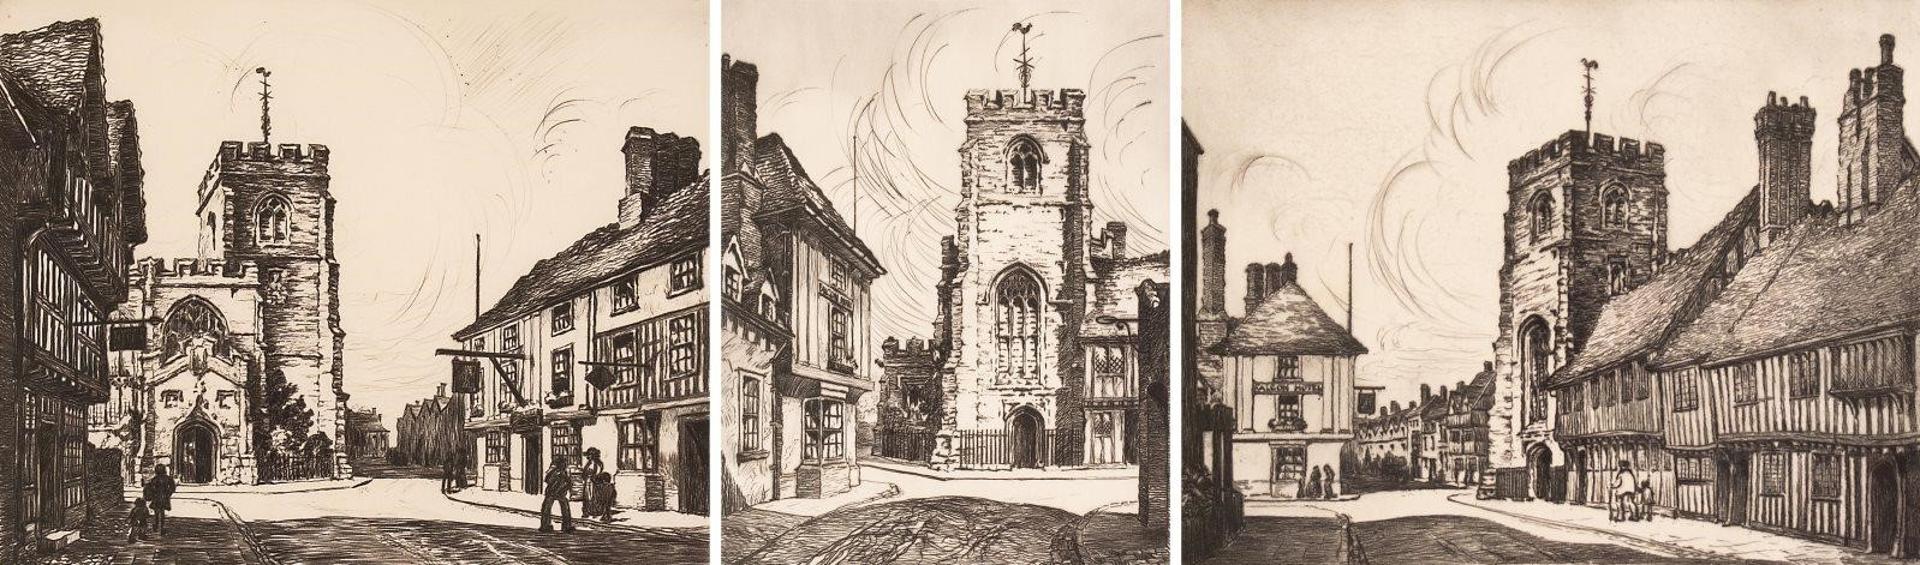 Sybil Andrews (1898-1992) - The Guild Chapel & Falcon Inn, Stratford-On-Avon / Scholars Lane, Stratford-On-Avon / The Old Grammar School & Almshouses, Stratford-On-Avon